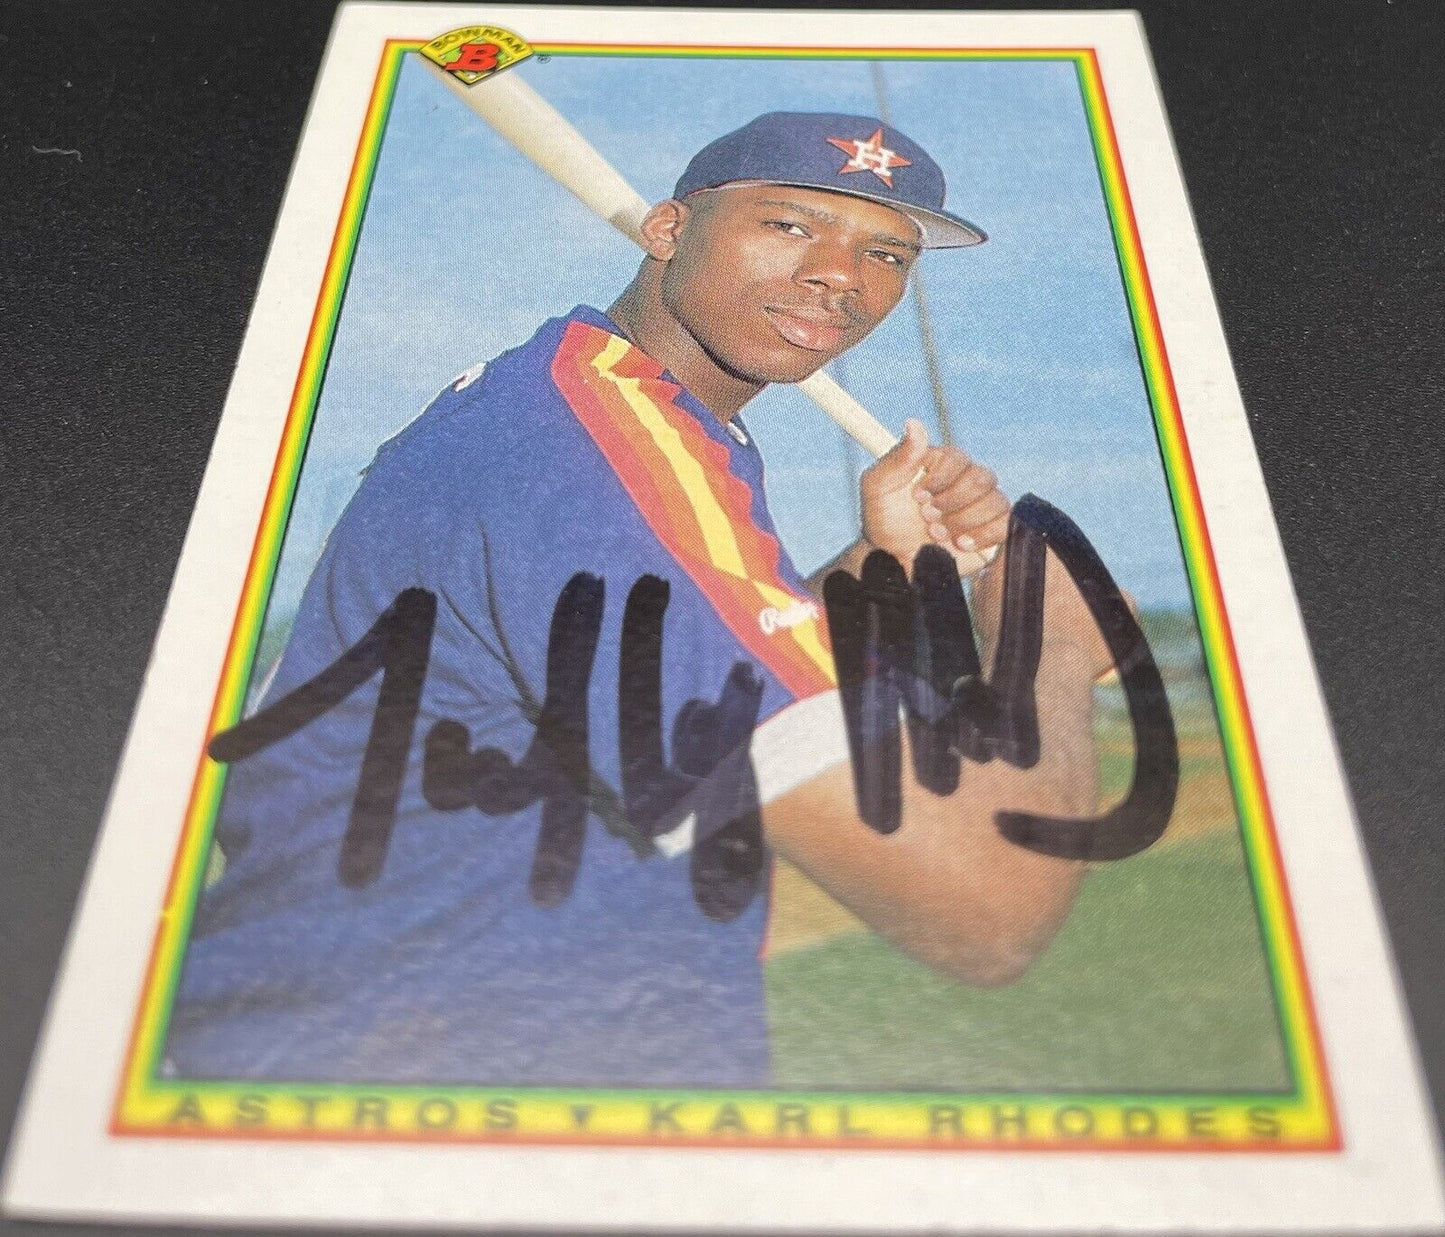 1990 Bowman #79 Karl Rhodes Autographe Rookie Card Houston Astros